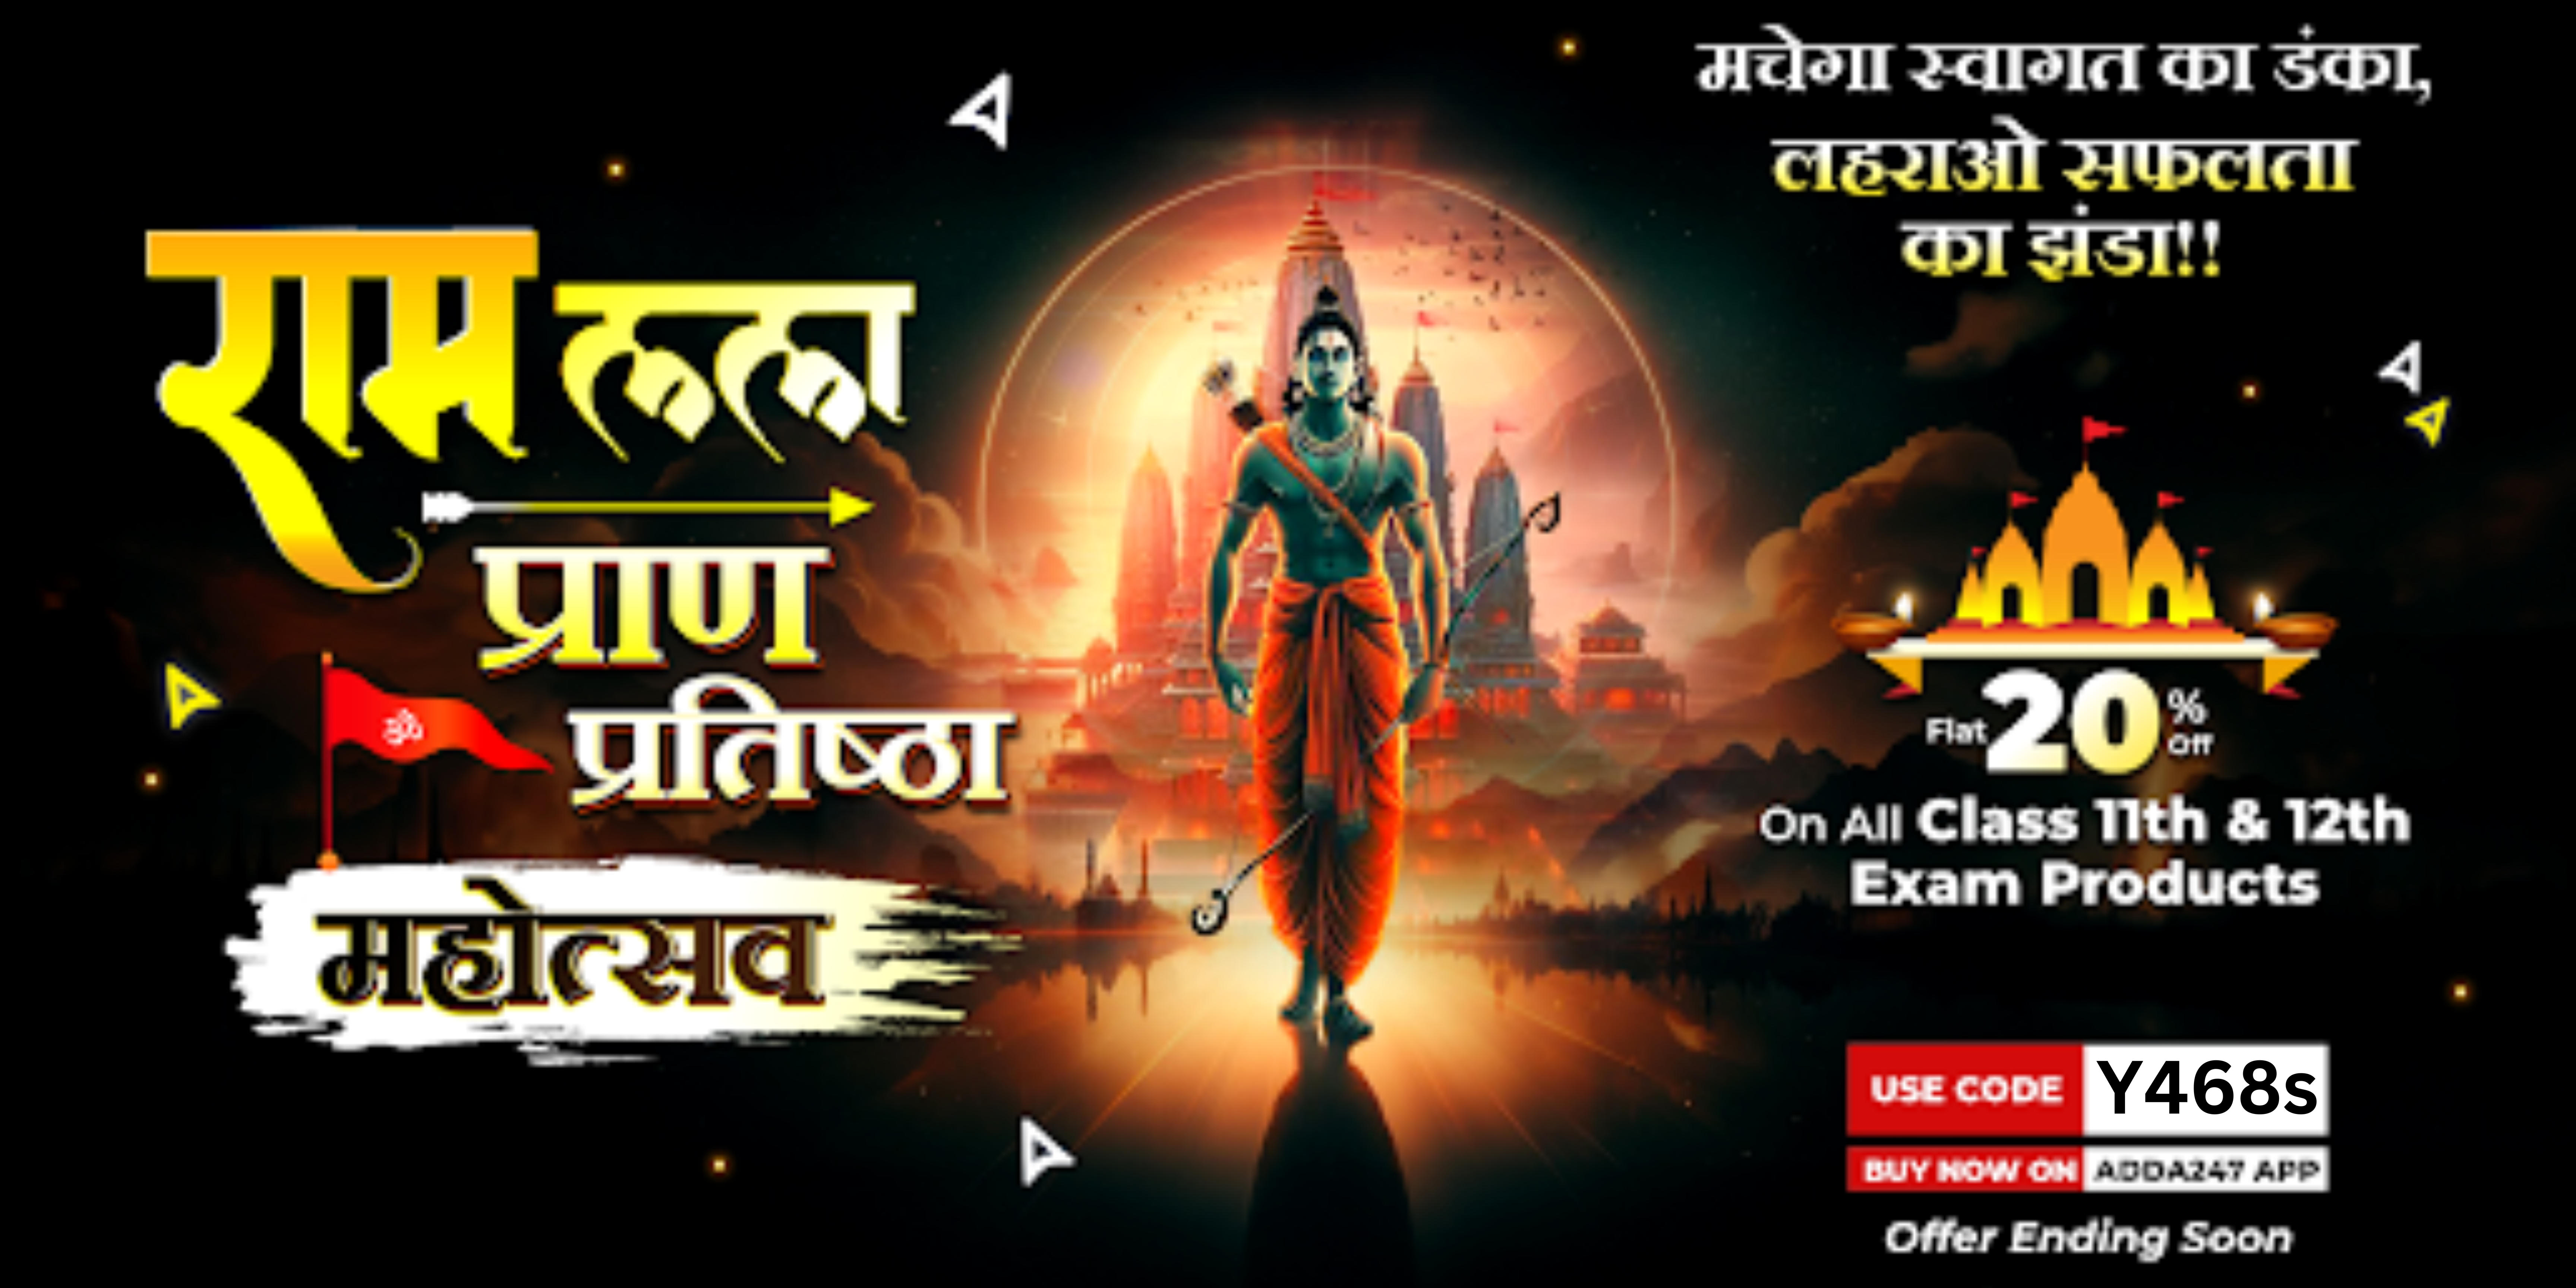 Ayodhya Ram Mandir Inauguration Event Schedule and Timings_6.1